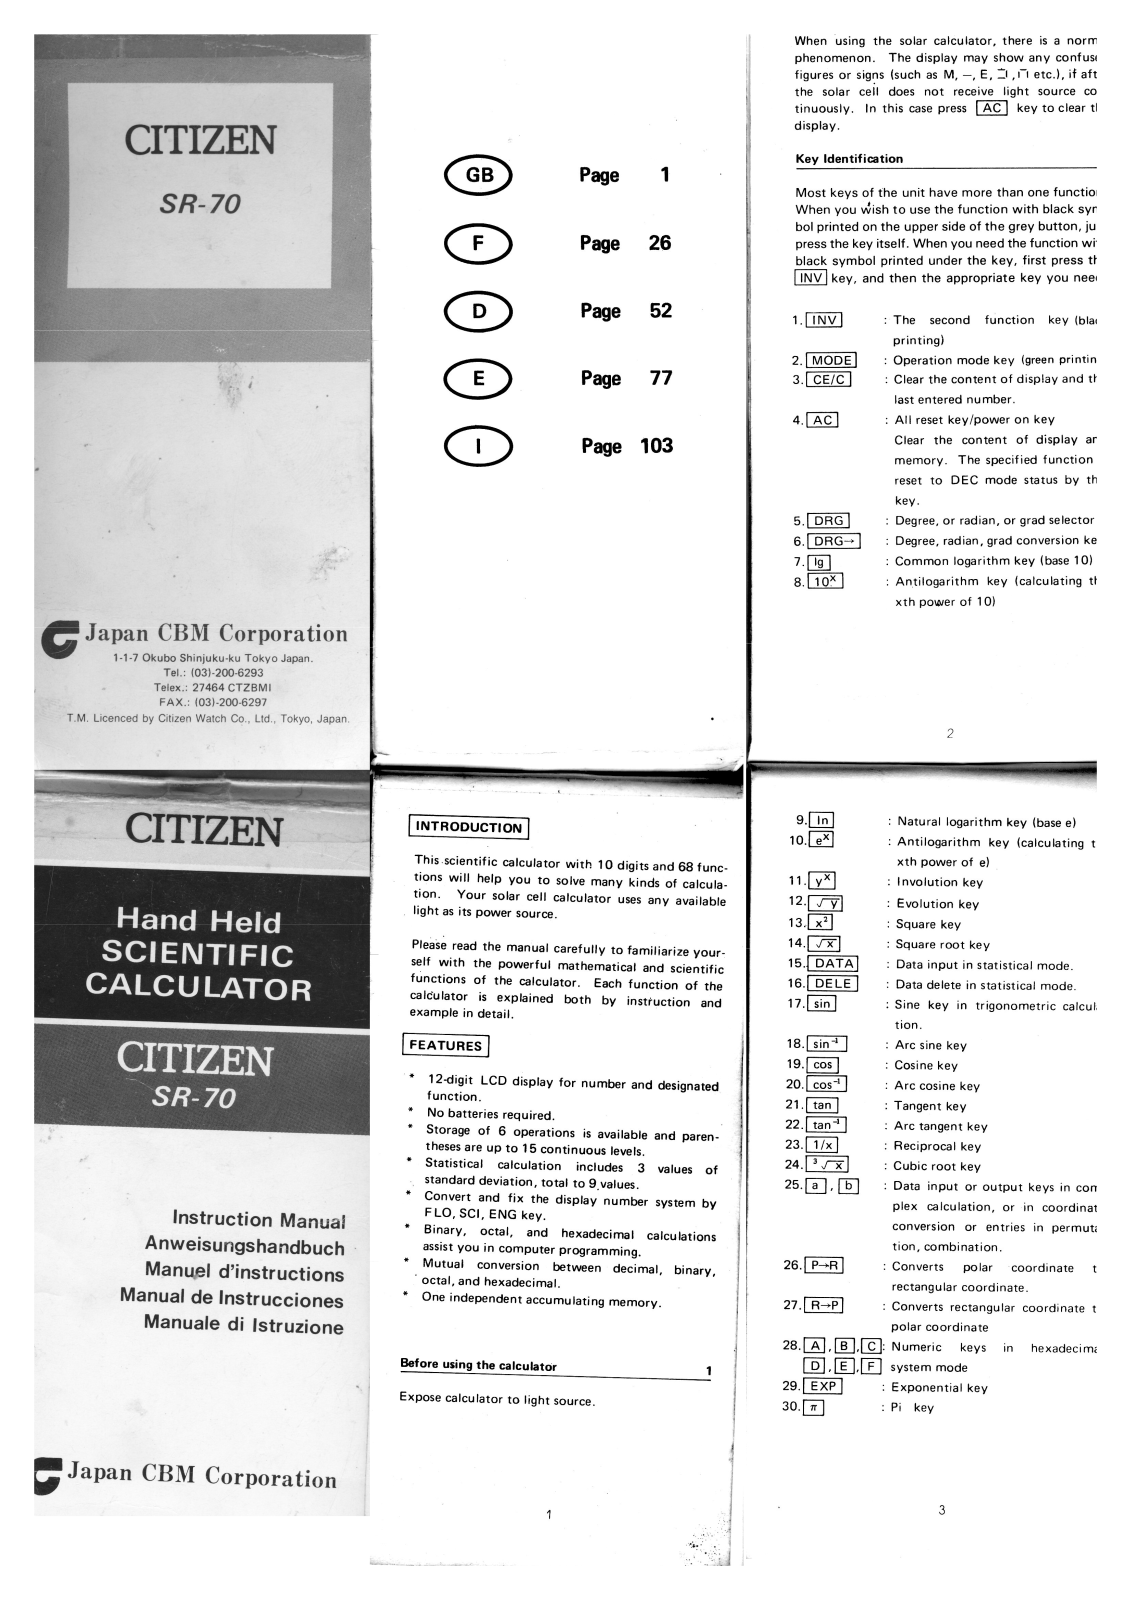 Citizen SR-70 User Manual